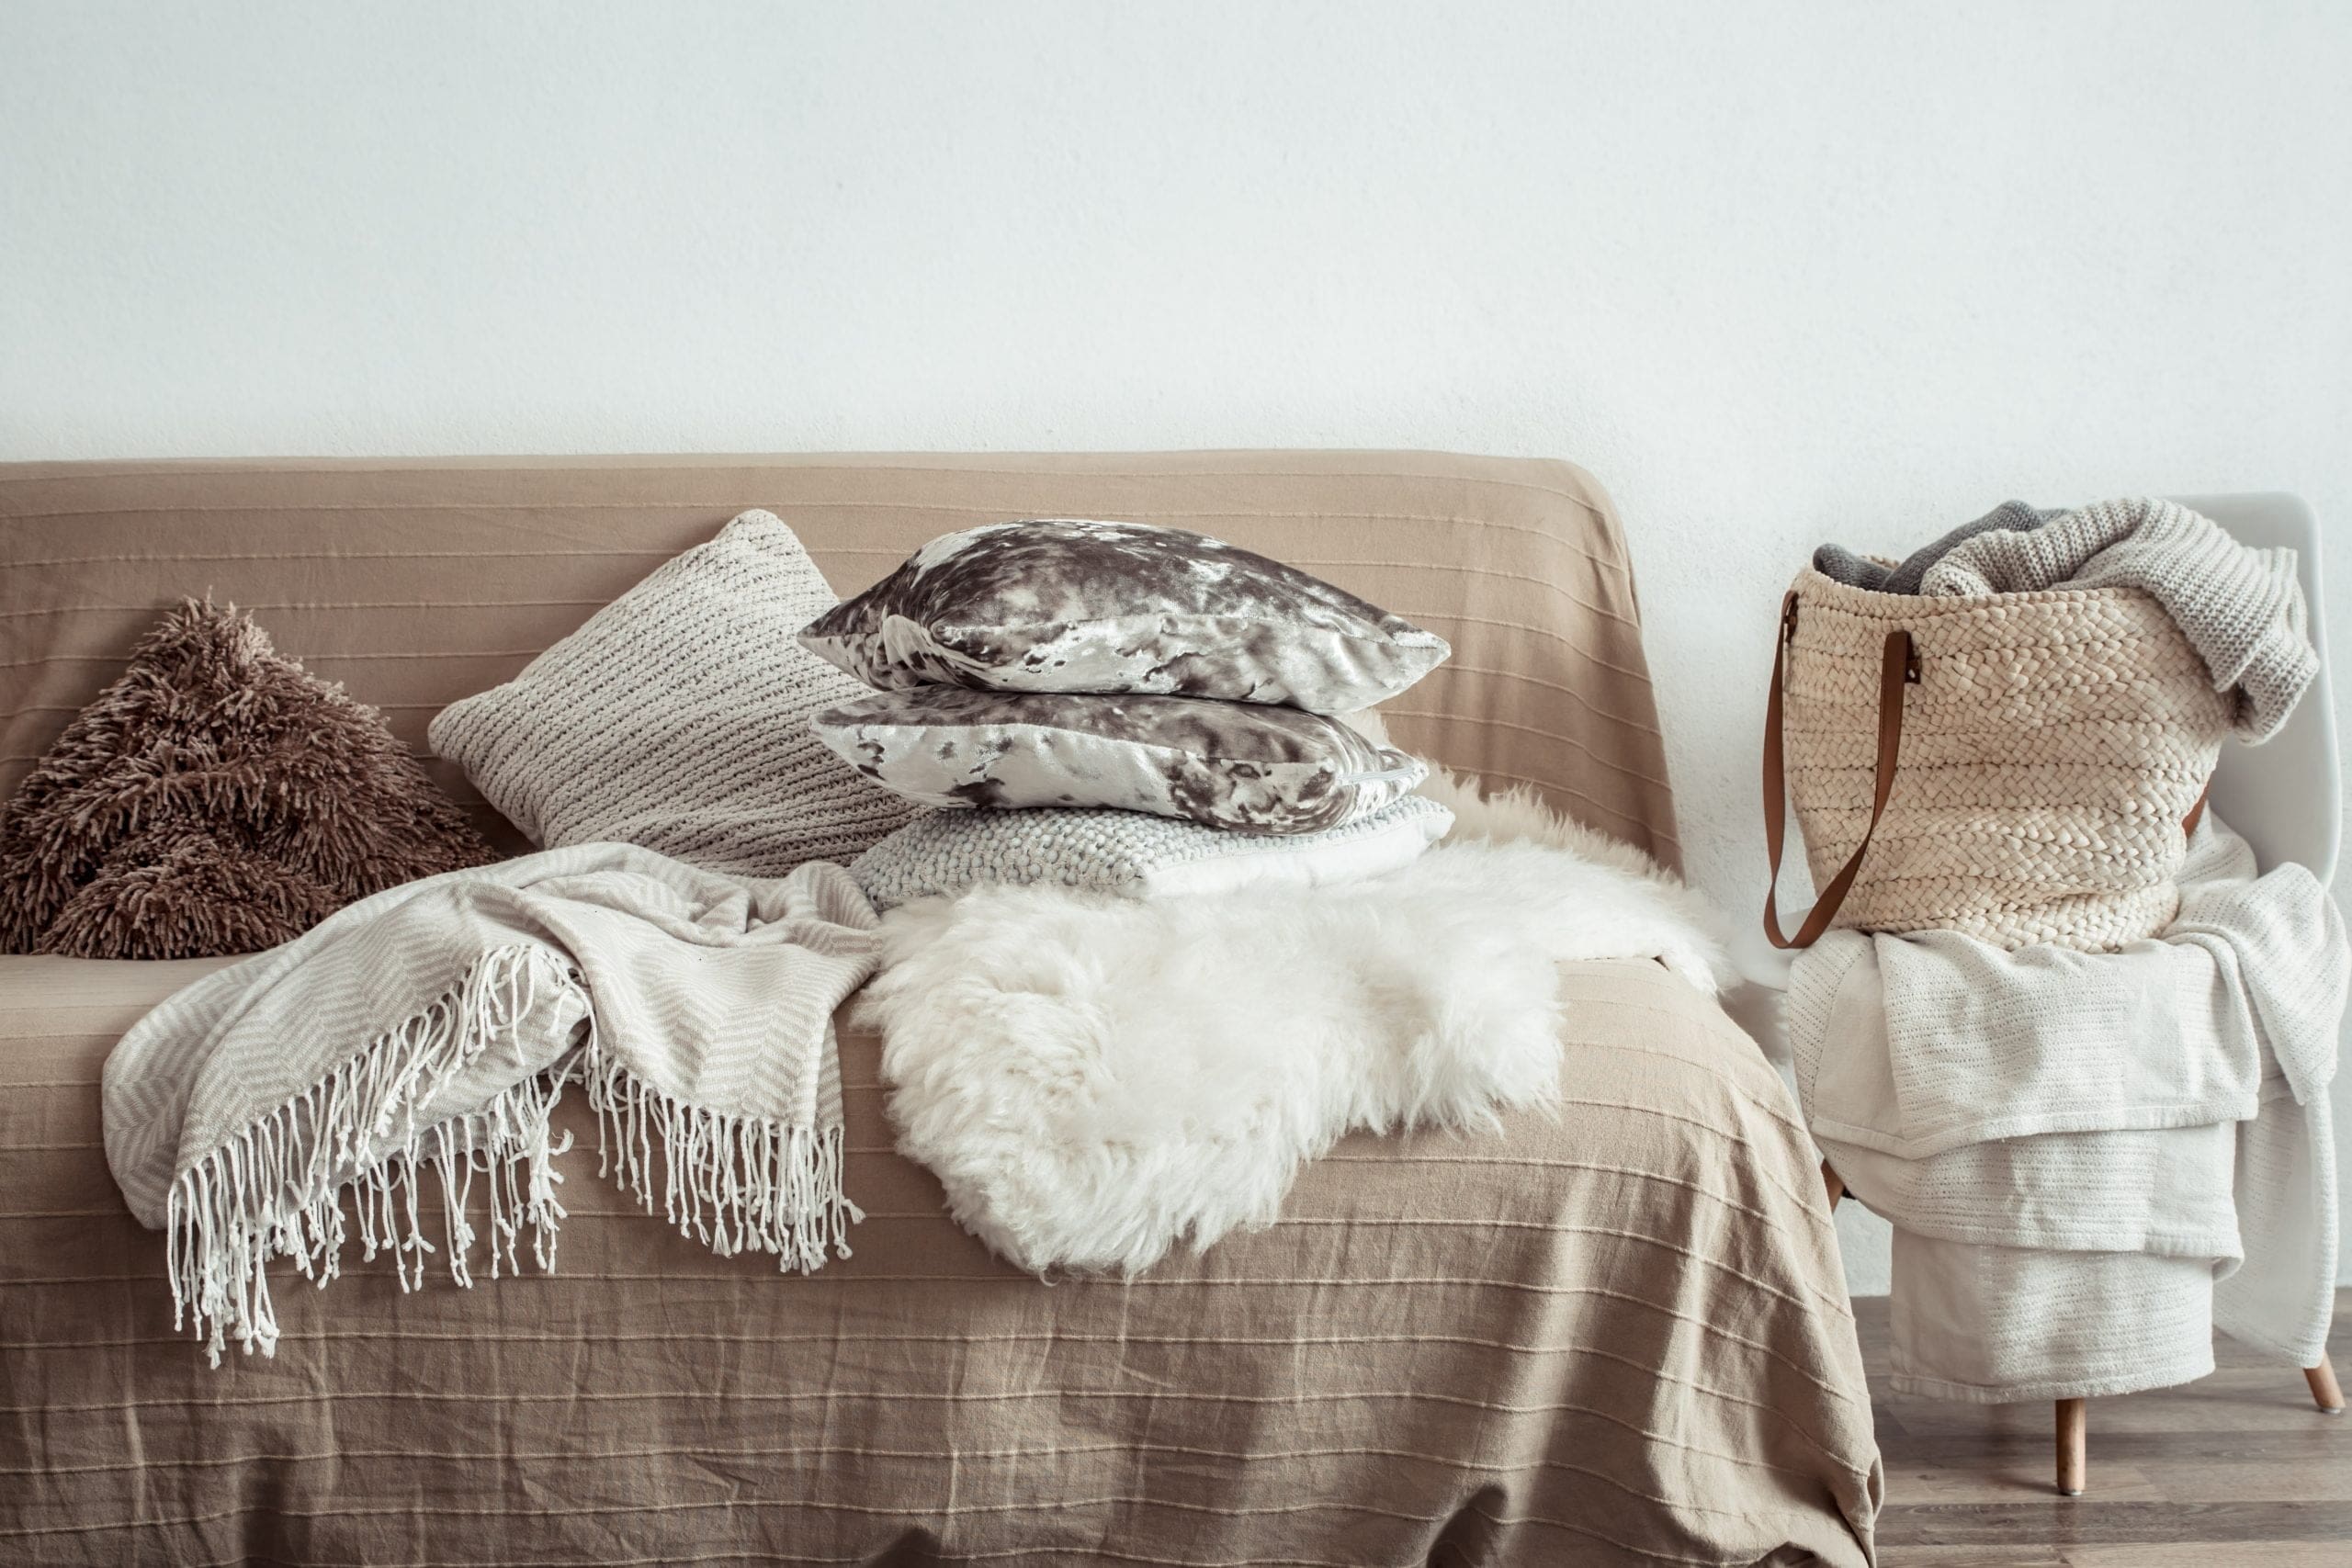 interior-living-room-with-sofa-throw-pillows